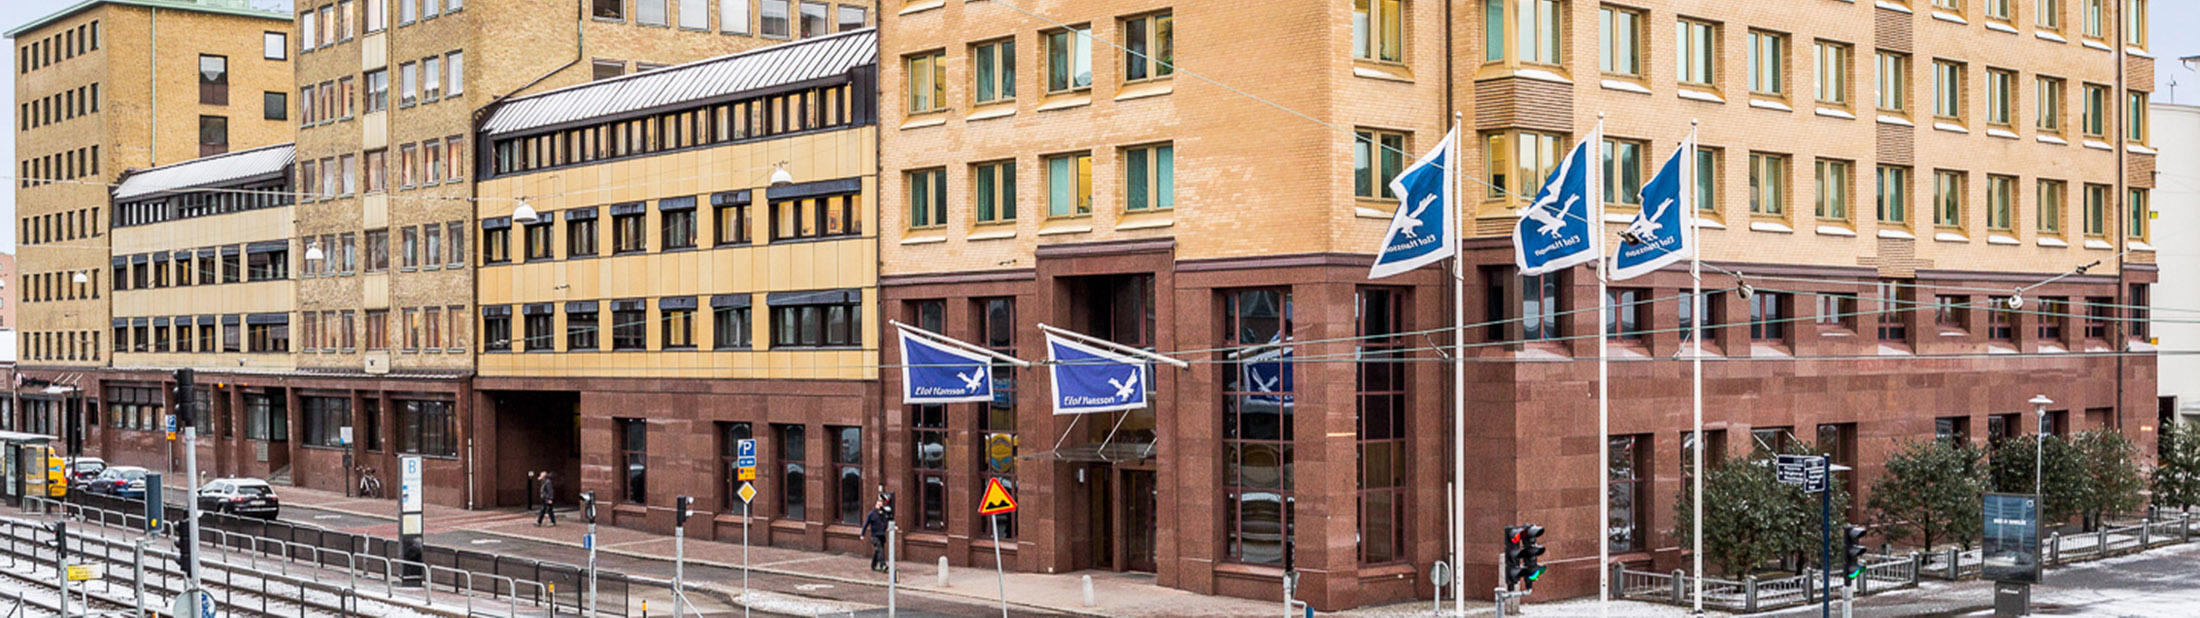 Elof Hanssons kontorsbyggnad.